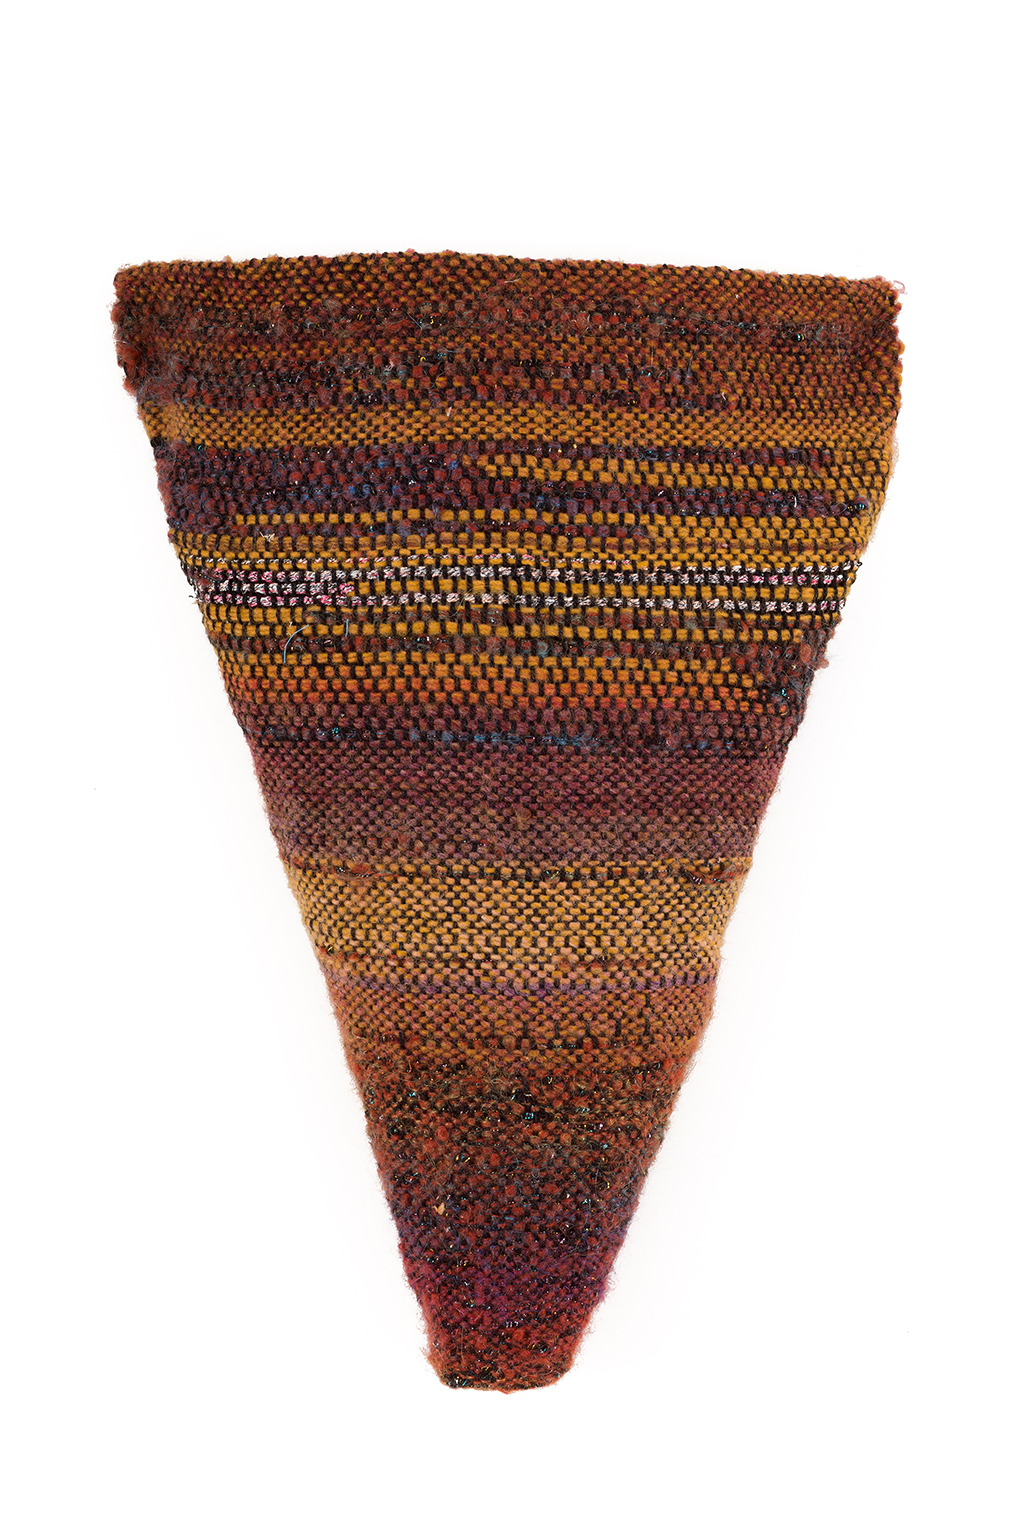  Sylvia Vander Sluis,  Earthy Torso 1,  Handwoven wool, beads, 17x13x3 